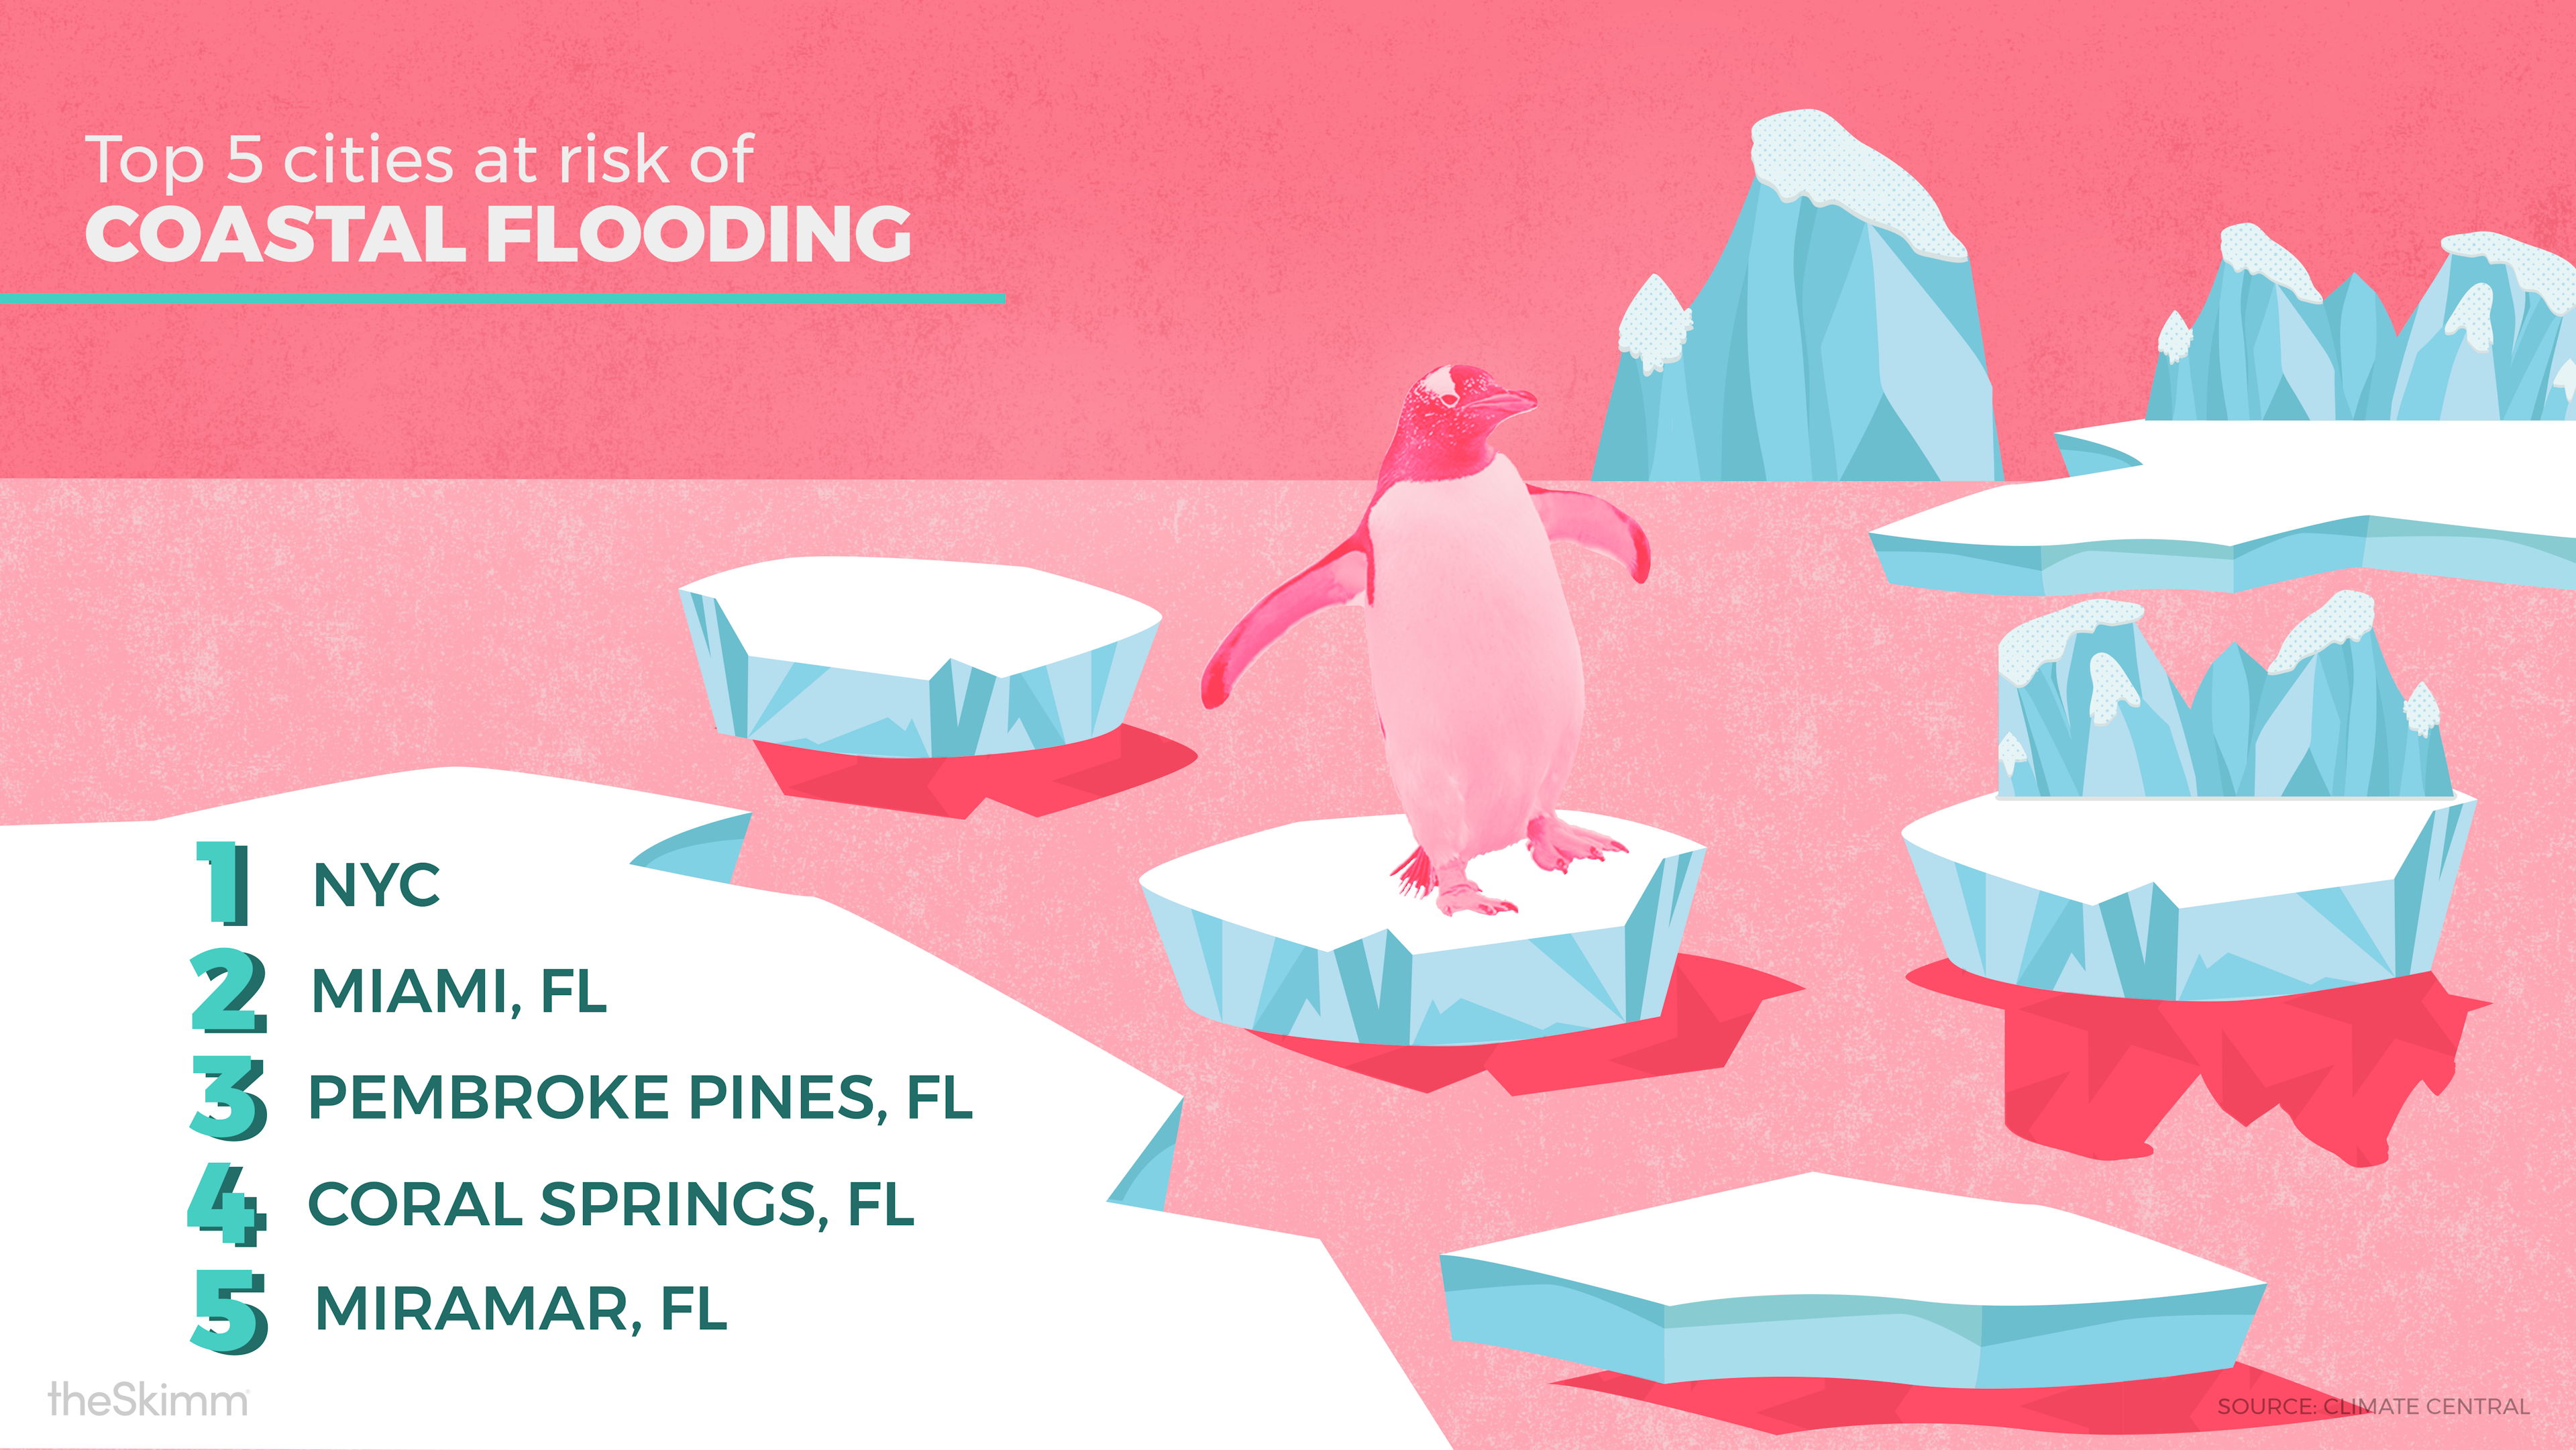 Top 5 cities at risk of coastal flooding: NYC; Miami, FL; Pembroke Pines, FL; Coral Springs, FL; Miramar, FL.